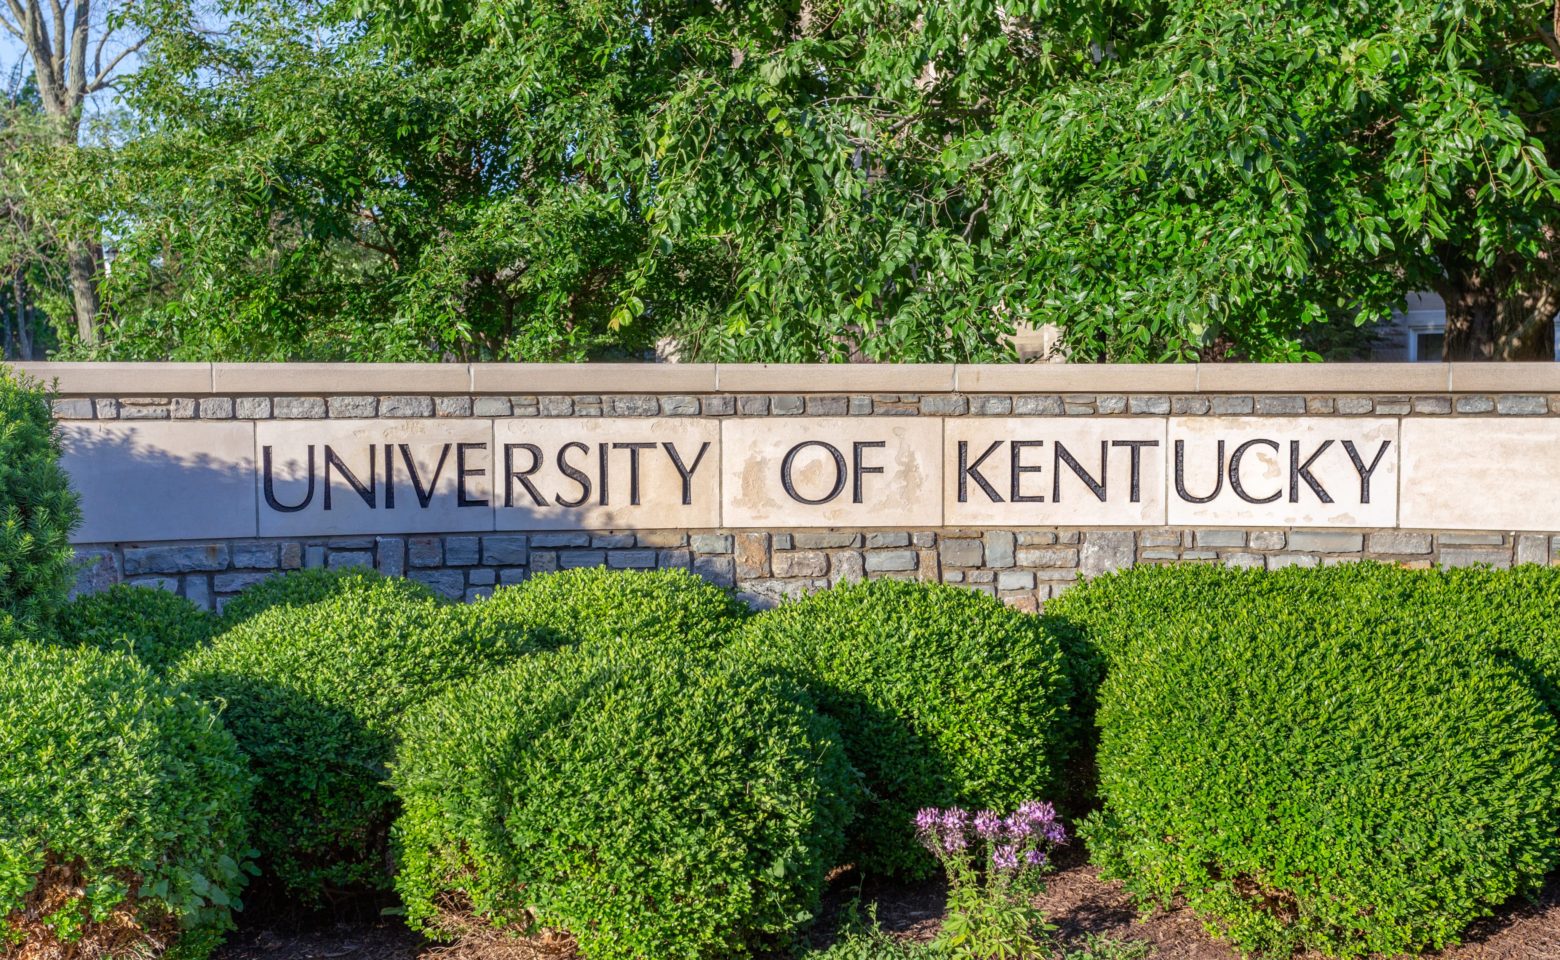 University of Kentucky Opens New Cannabis Research Center